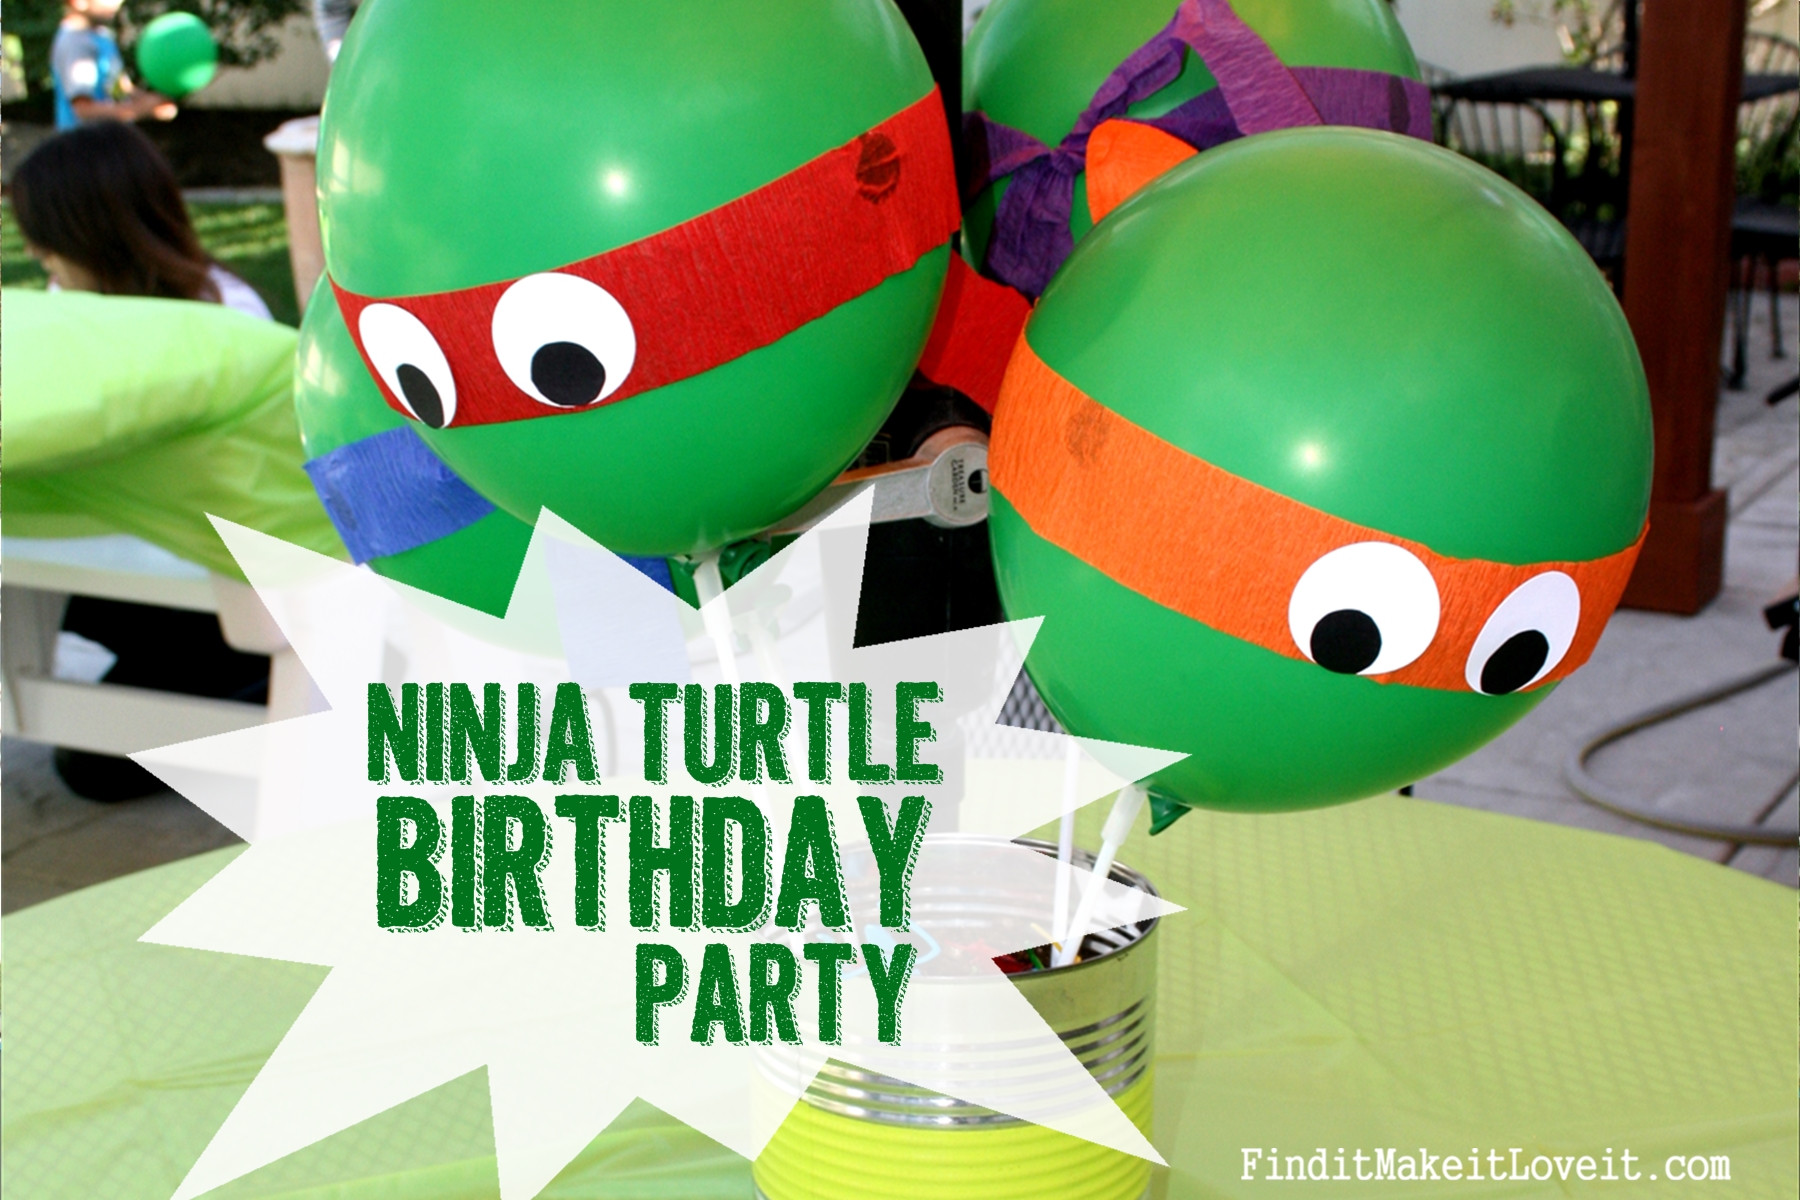 Best ideas about Ninja Turtles Birthday Decorations
. Save or Pin Teenage Mutant Ninja Turtle Birthday Party Now.